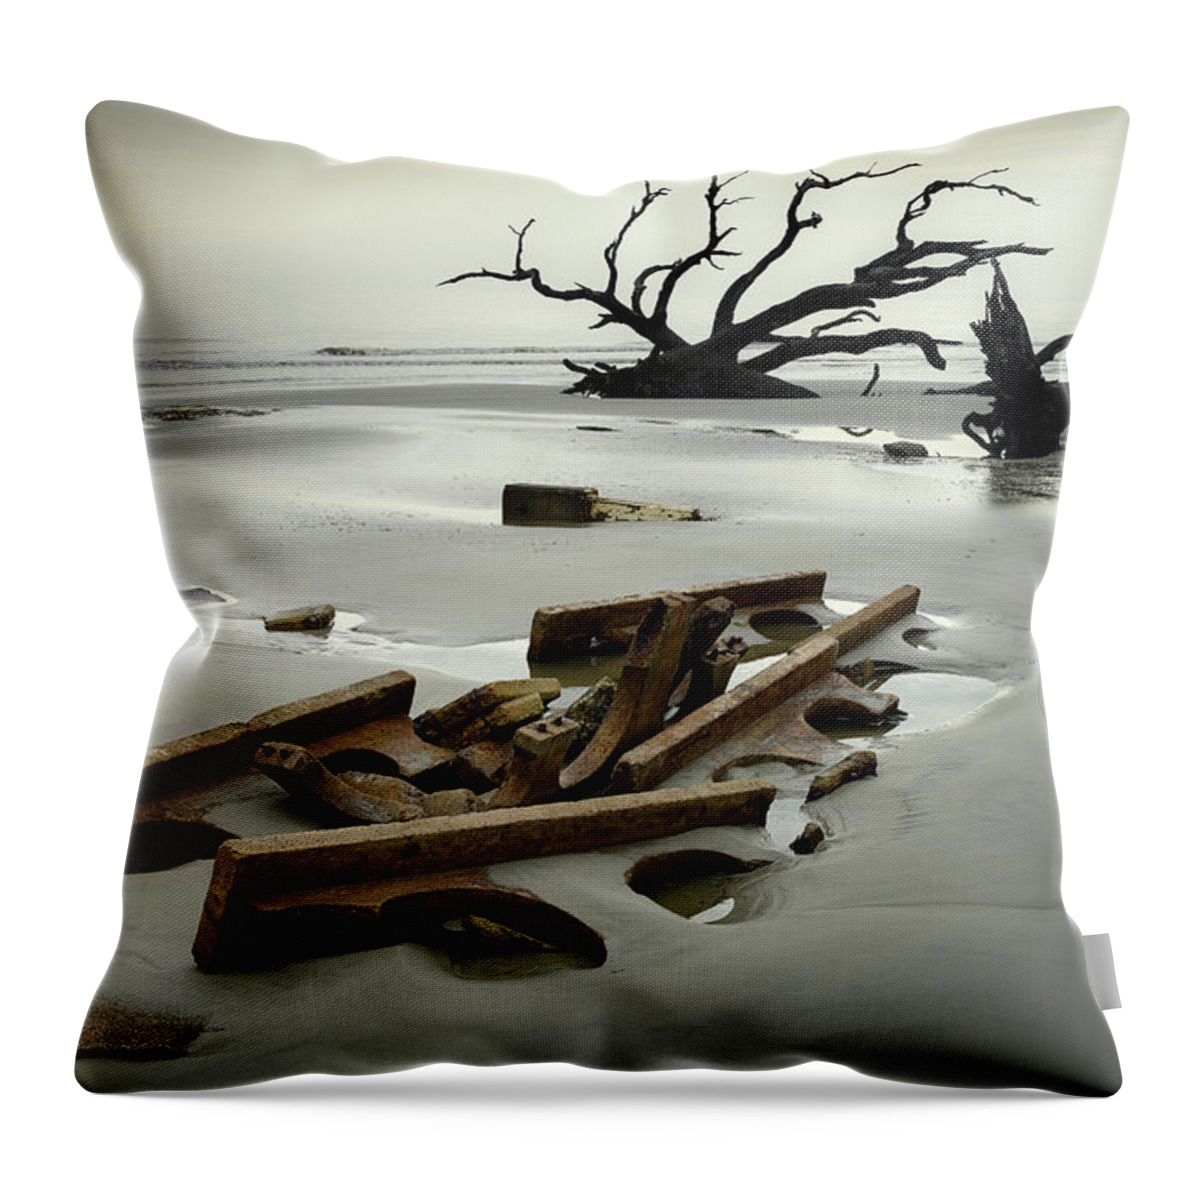 Driftwood Beach Throw Pillow featuring the photograph Ruins on Driftwood Beach by James Covello